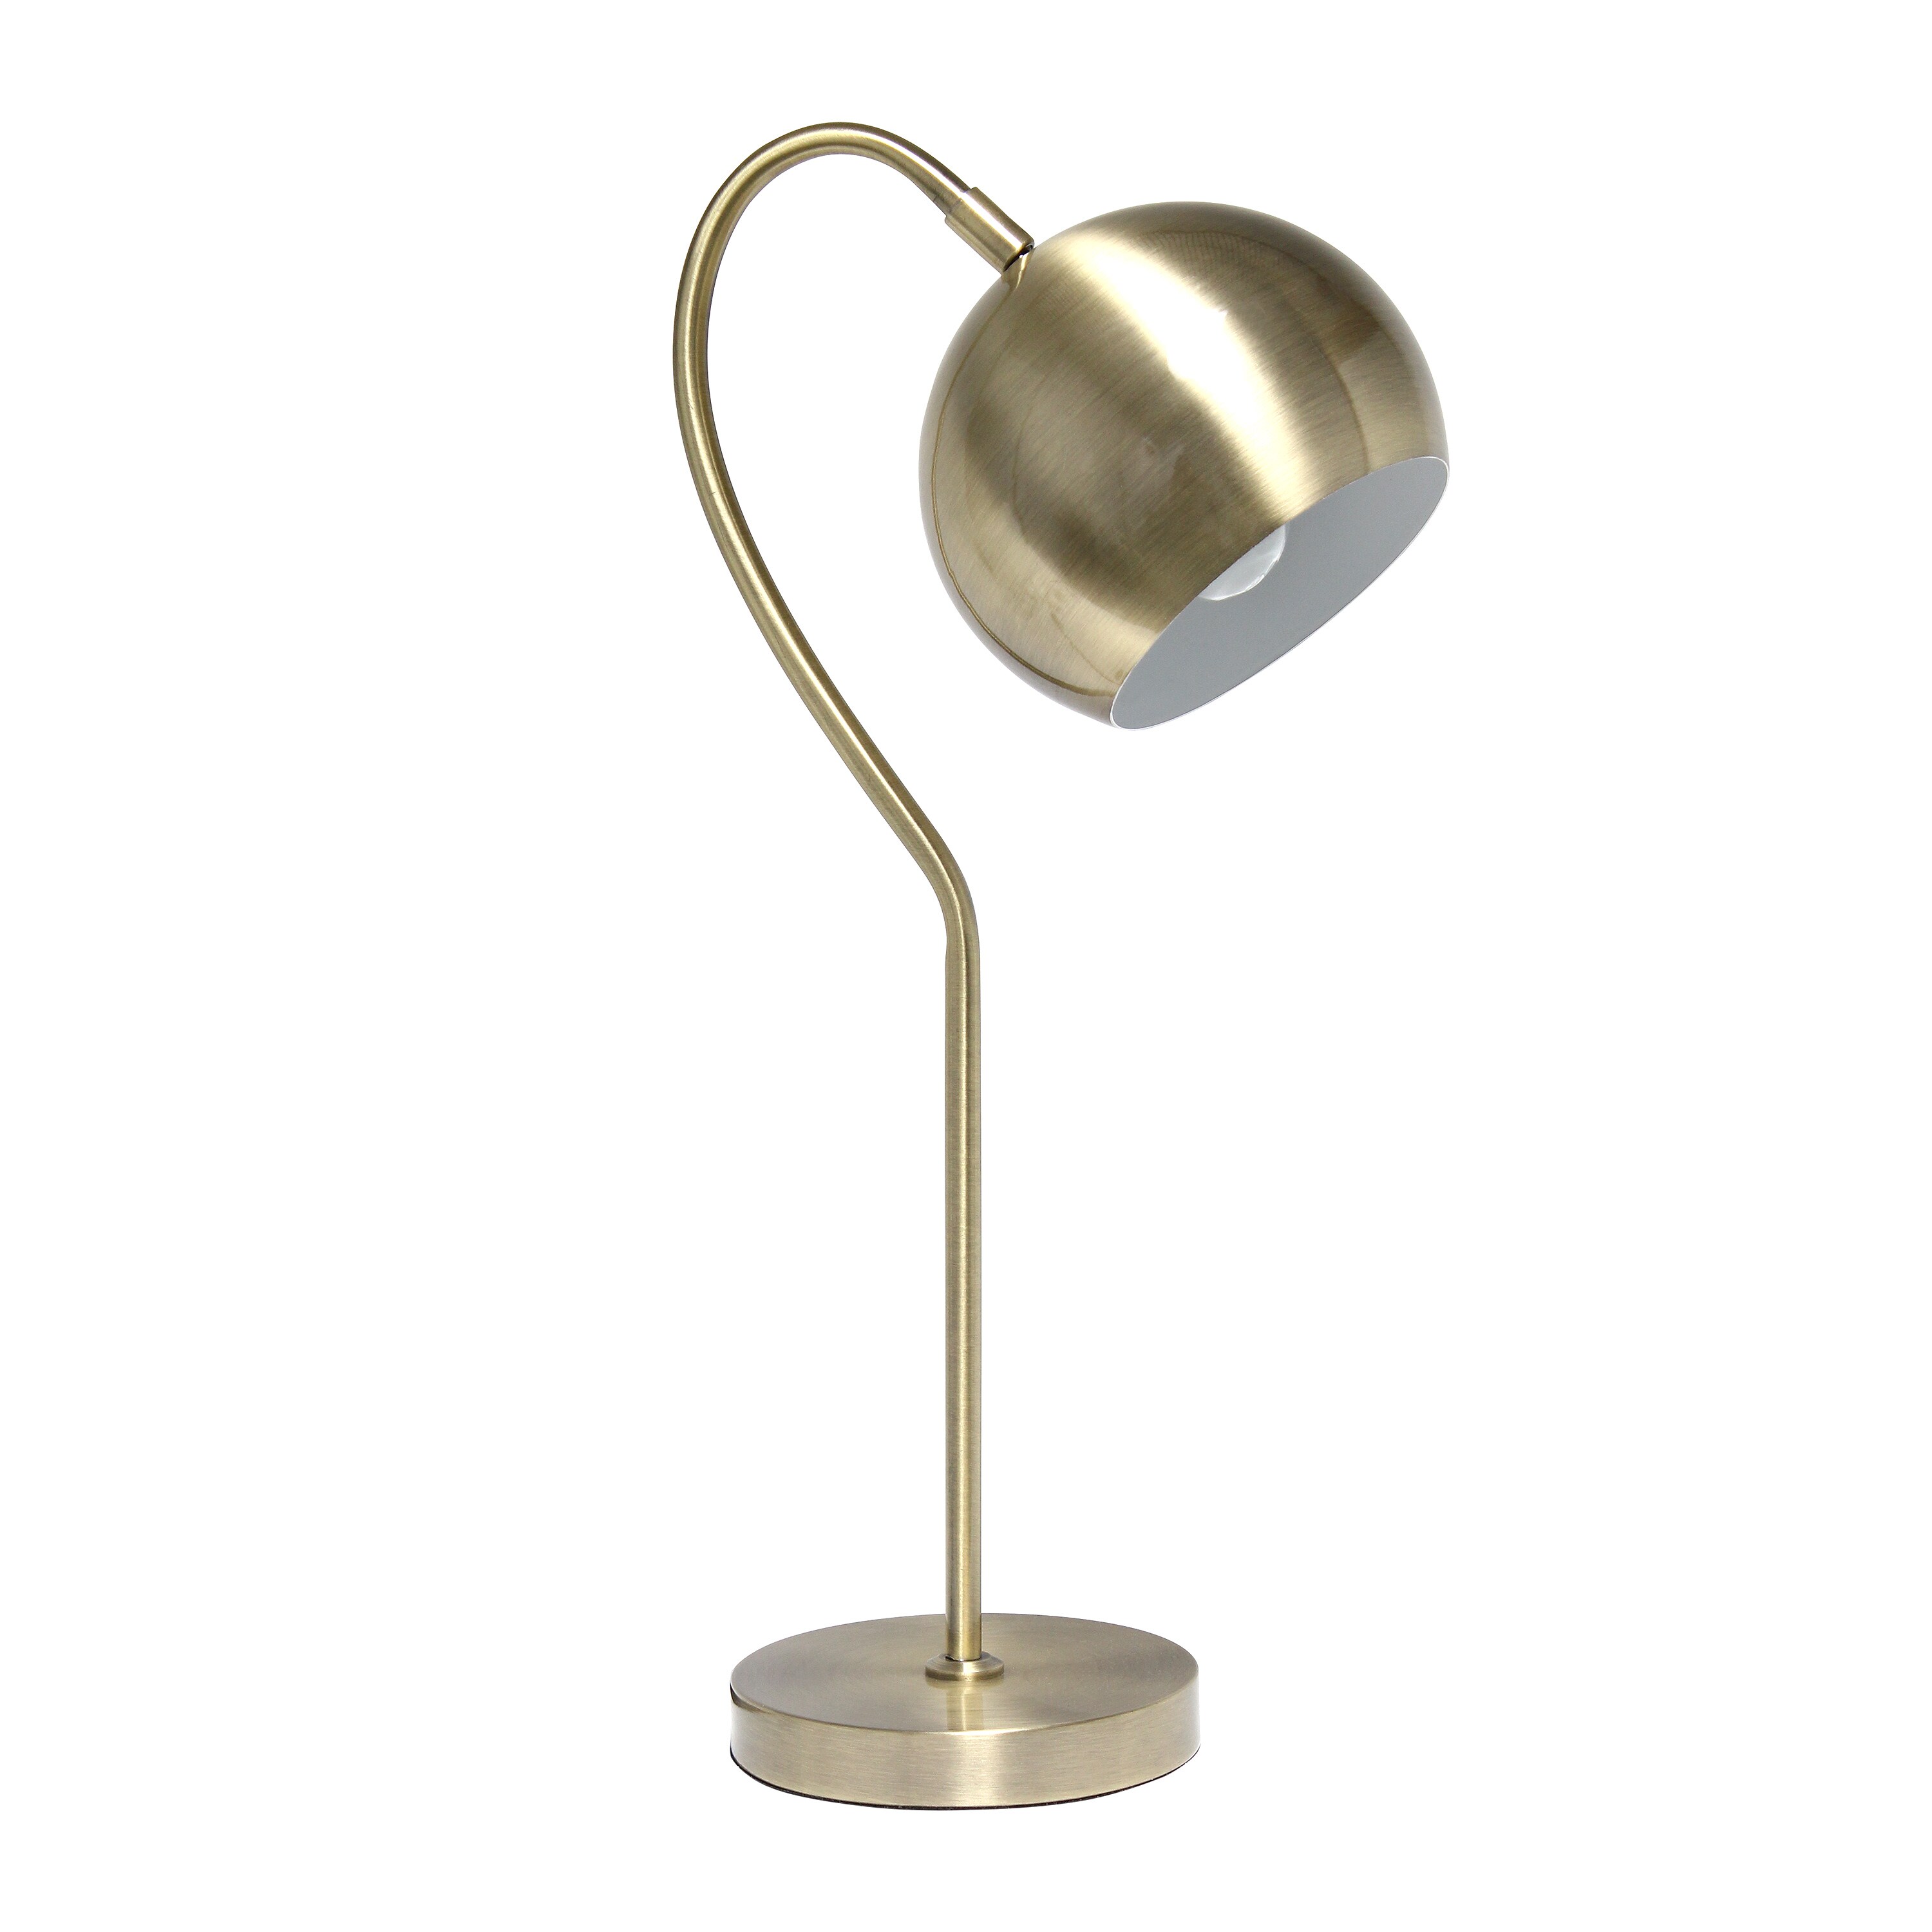 B&p Lamp Antique Brass Decorative Chain. Foot 13113A